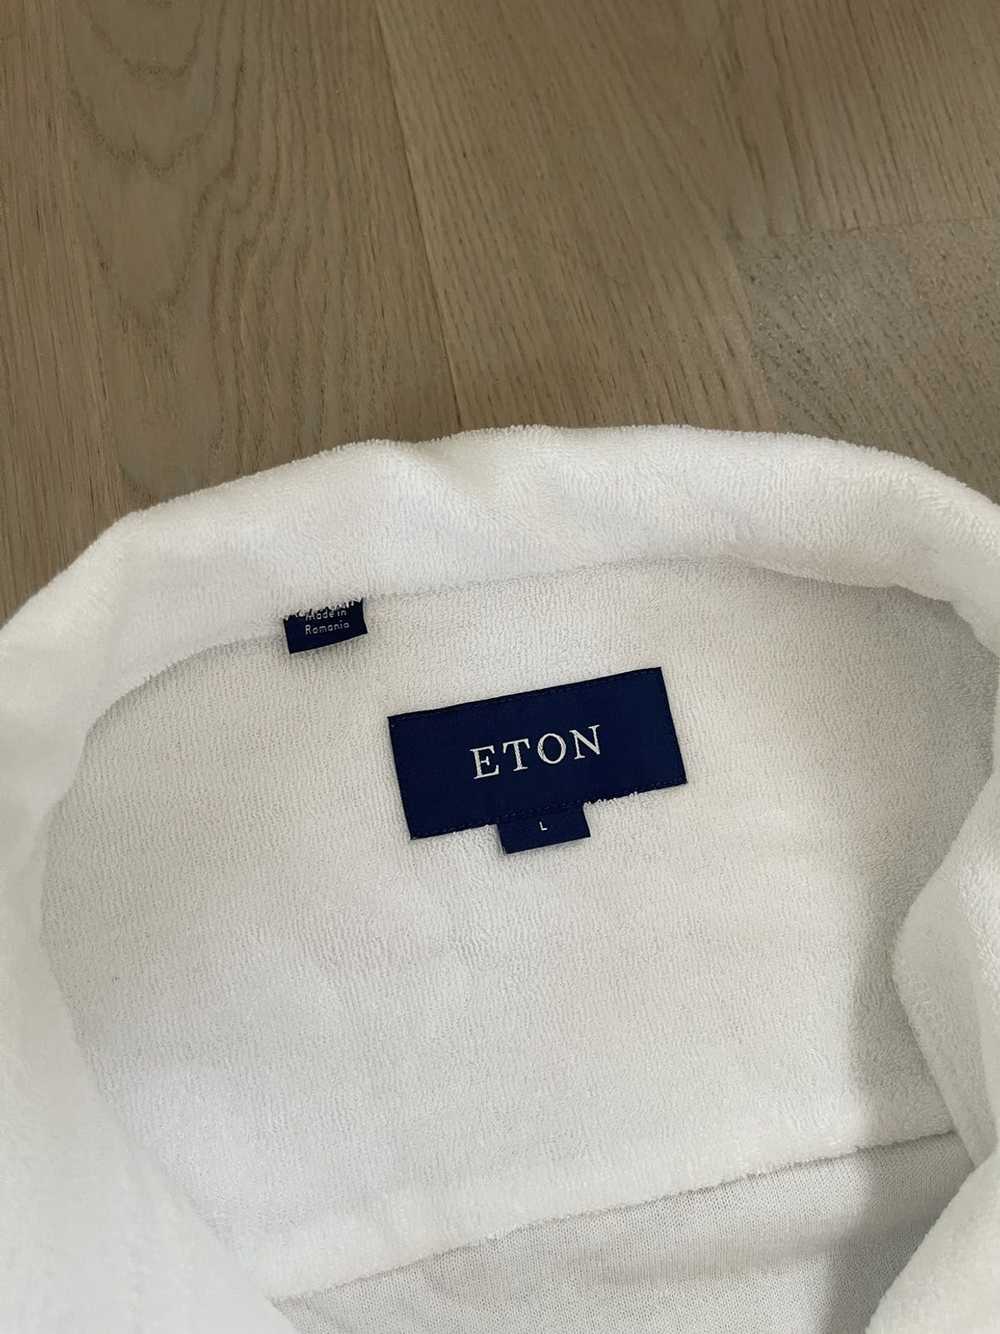 Eton ETON shirt real sizes in photos by tape meas… - image 3